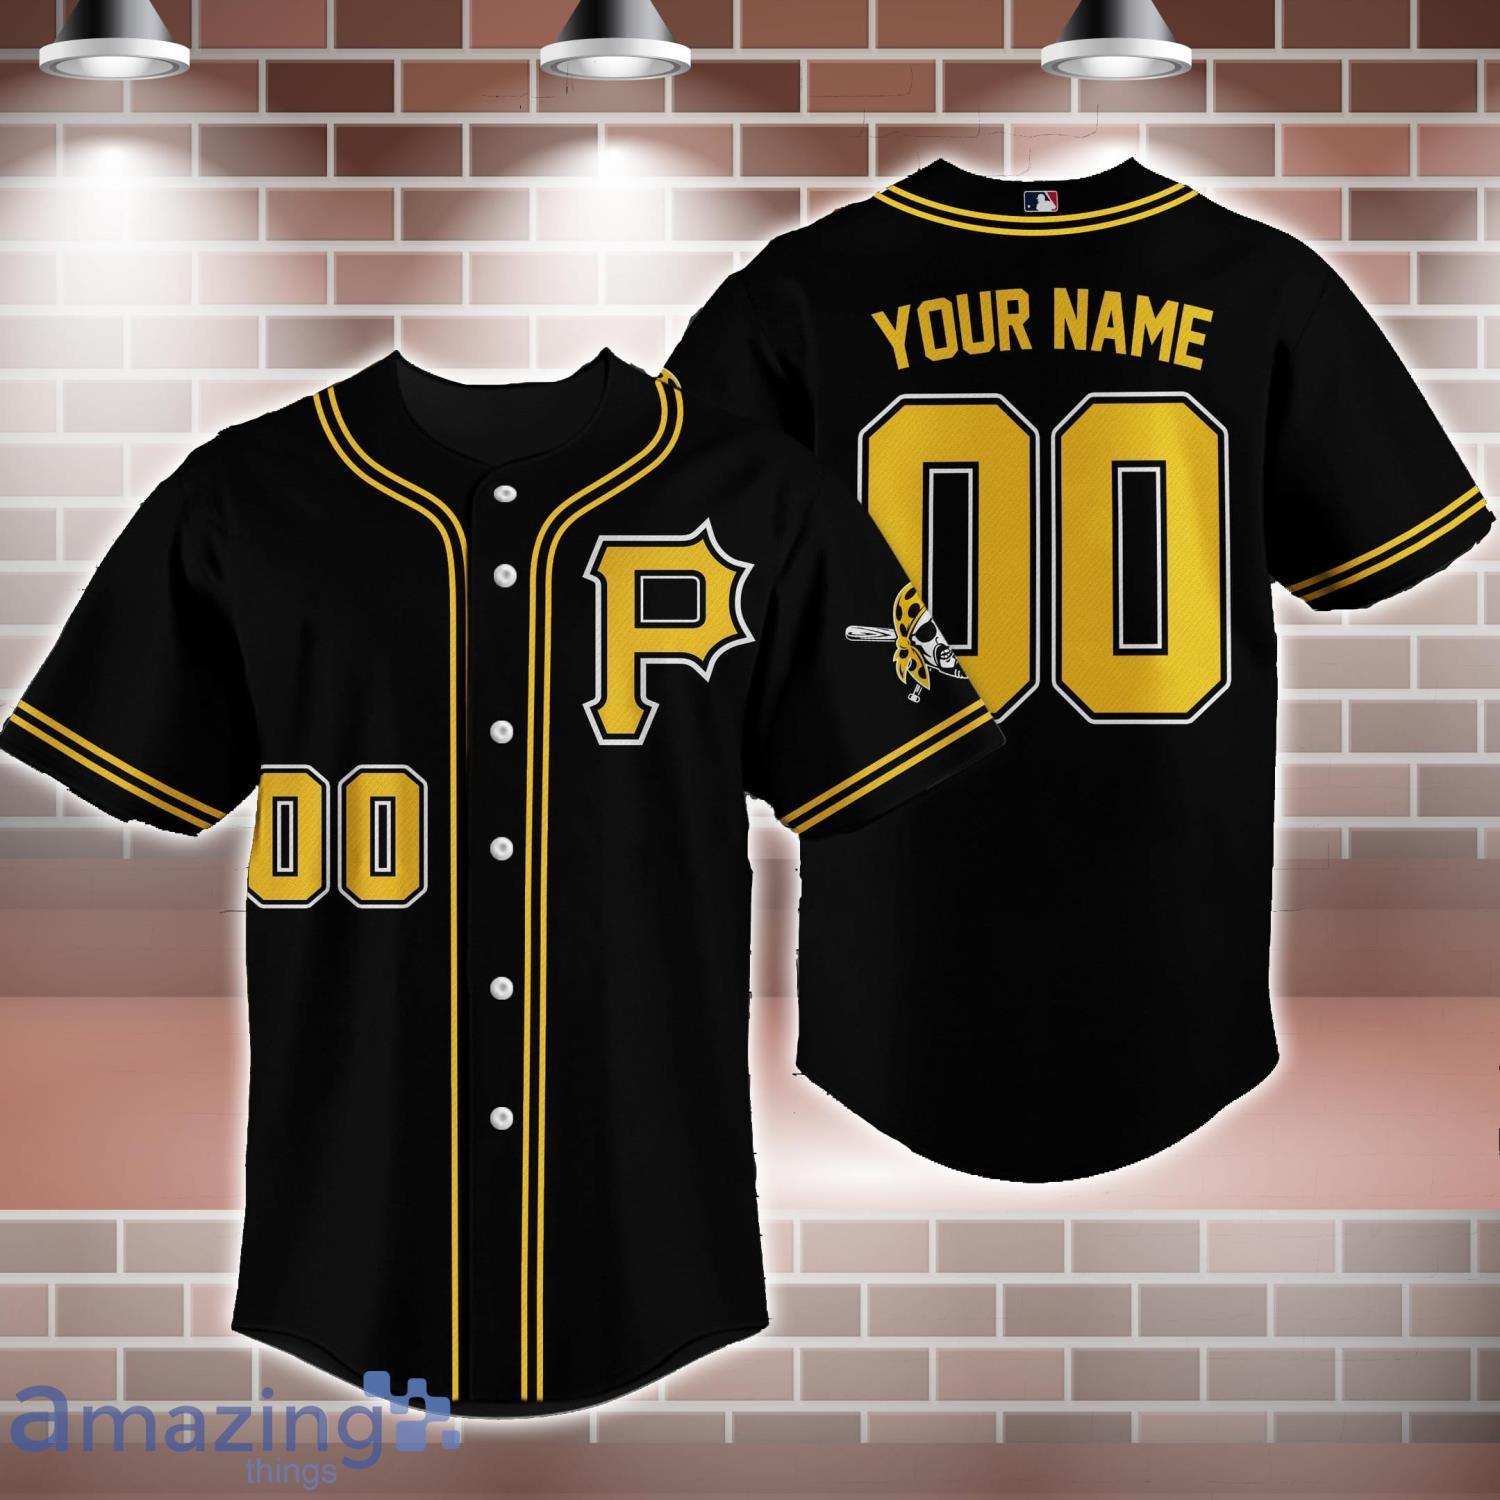 Pittsburgh Pirates This Is The Way Night Shirt, Custom prints store